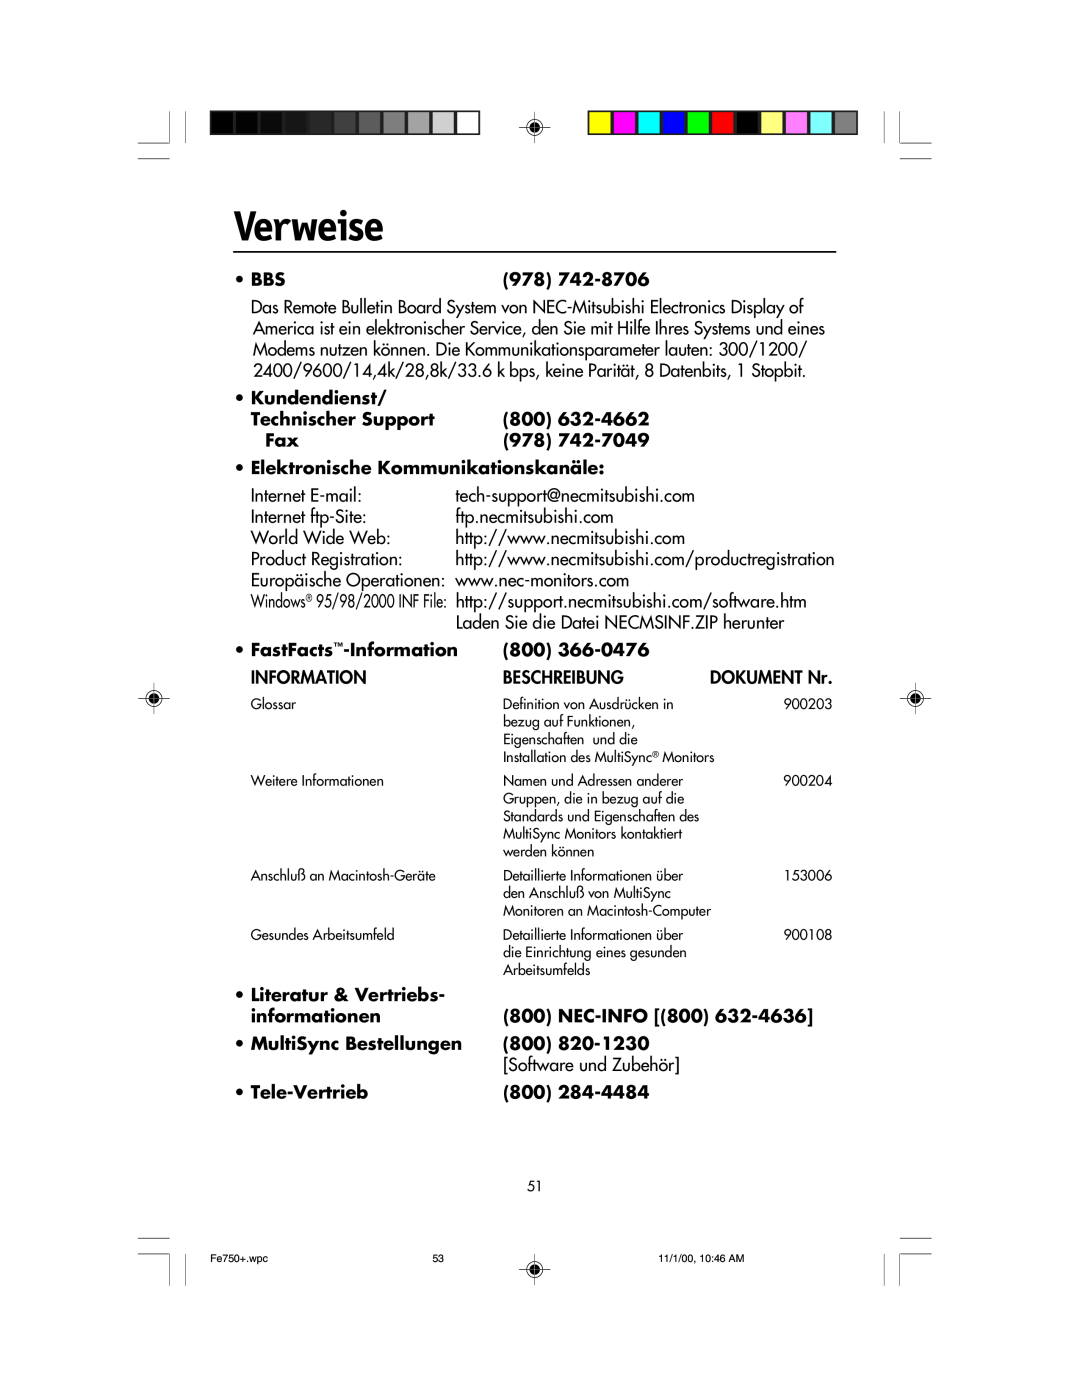 NEC FE750 Plus user manual Verweise, DOKUMENT Nr 